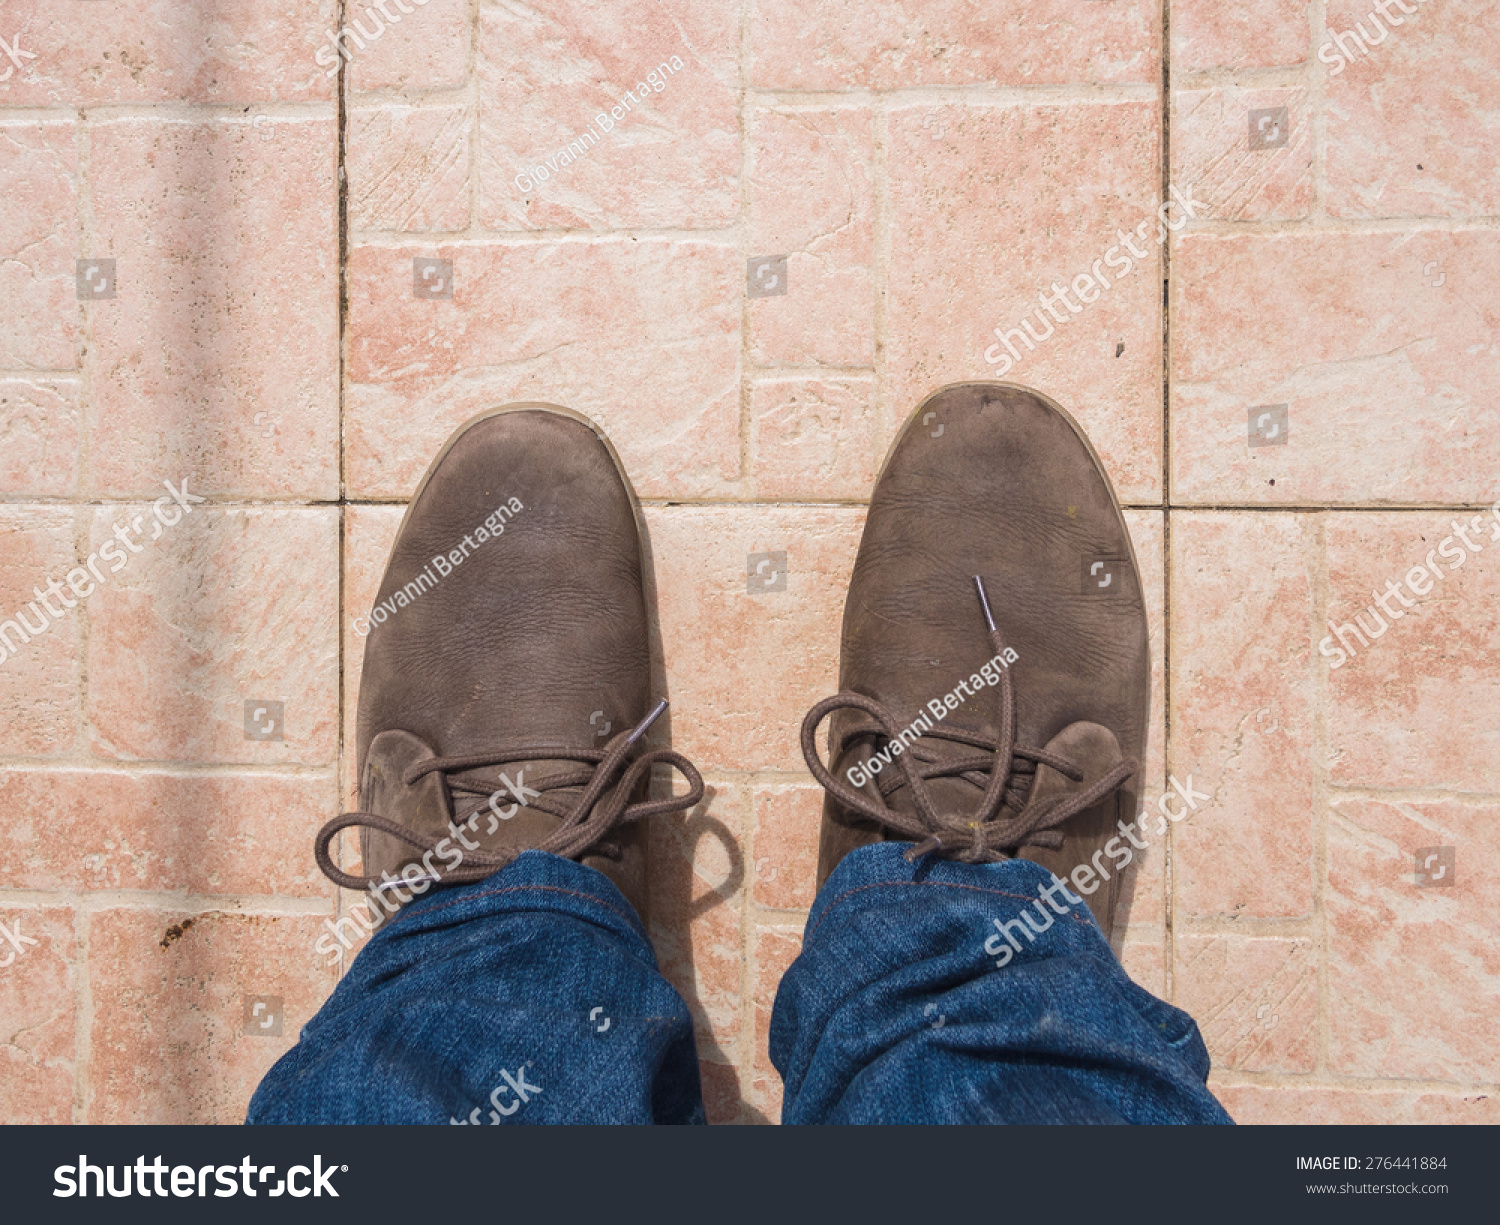 Feet On The Ground On The Sidewalks Of Ceramic Tiles Stock Photo ...